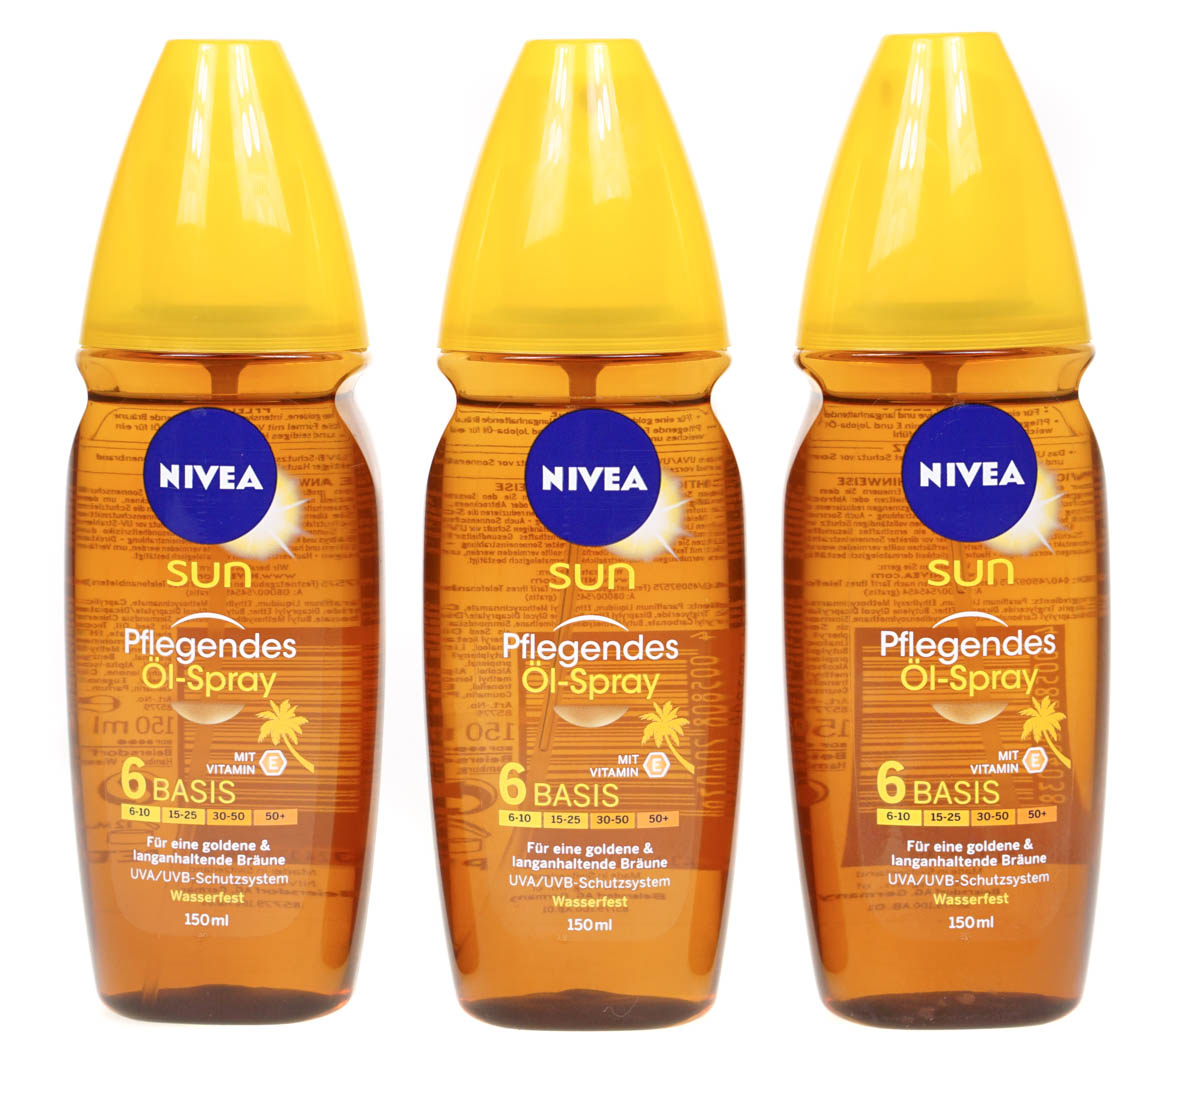 Nivea Sun Spf6 Tanning Oil Spray 150ml Low Protection Sunscreen Pflegendes Basis Ebay